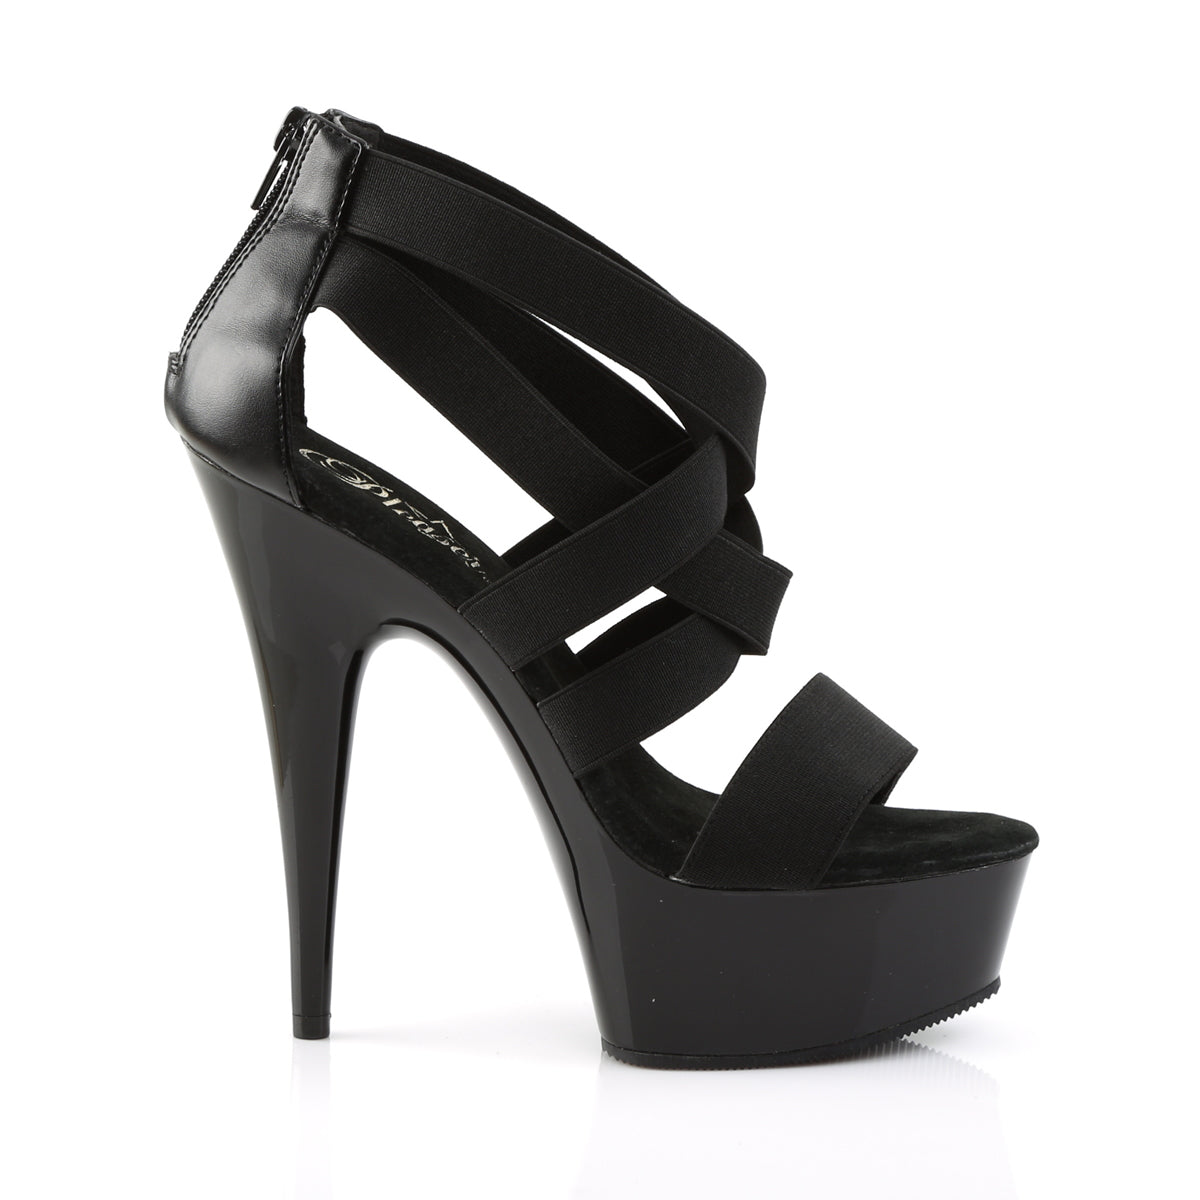 DELIGHT-669 Pleaser 6 Inch Heel Black Pole Dancing Platforms-Pleaser- Sexy Shoes Fetish Heels